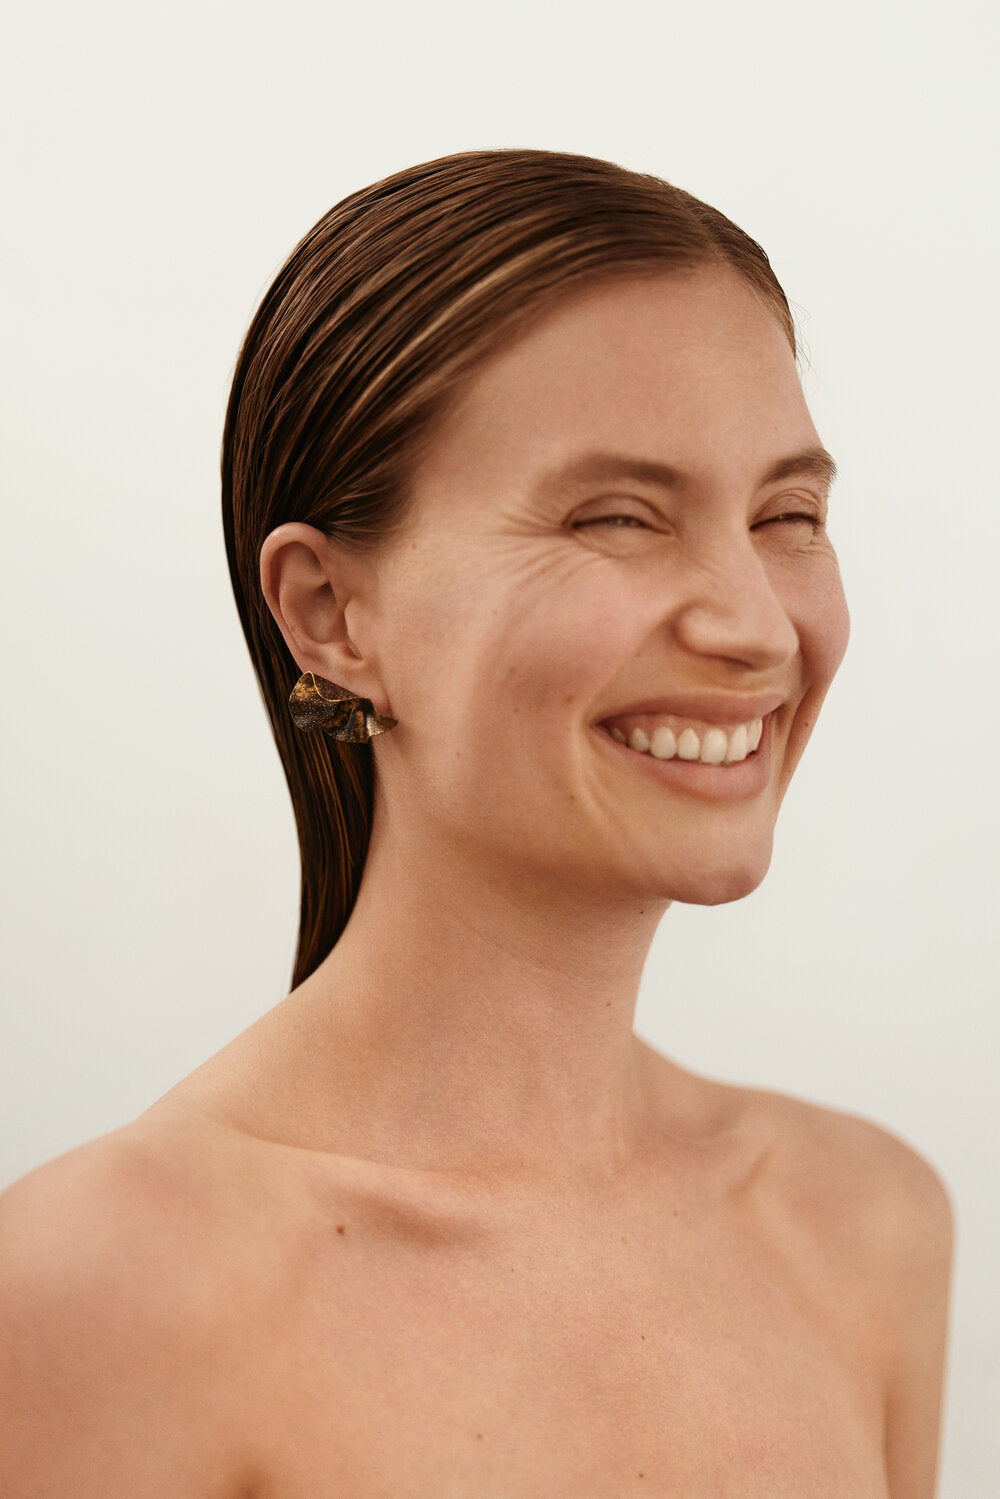 Oy earring - Mold atelier X Sofia Olsson